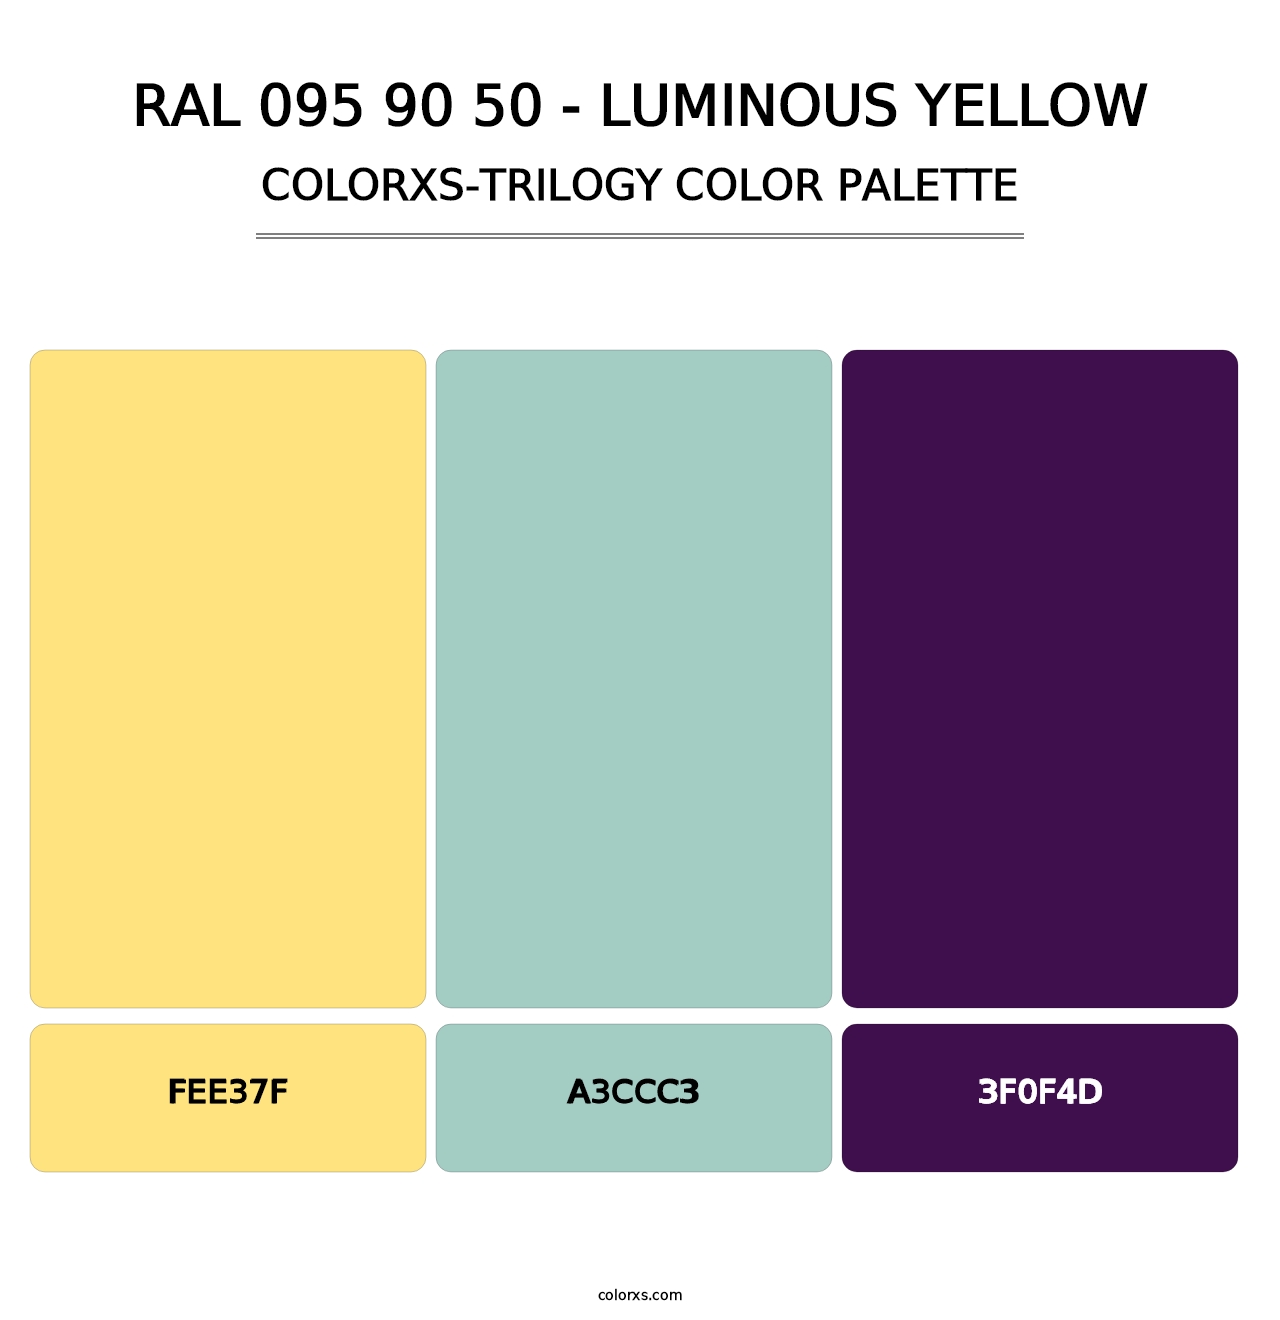 RAL 095 90 50 - Luminous Yellow - Colorxs Trilogy Palette